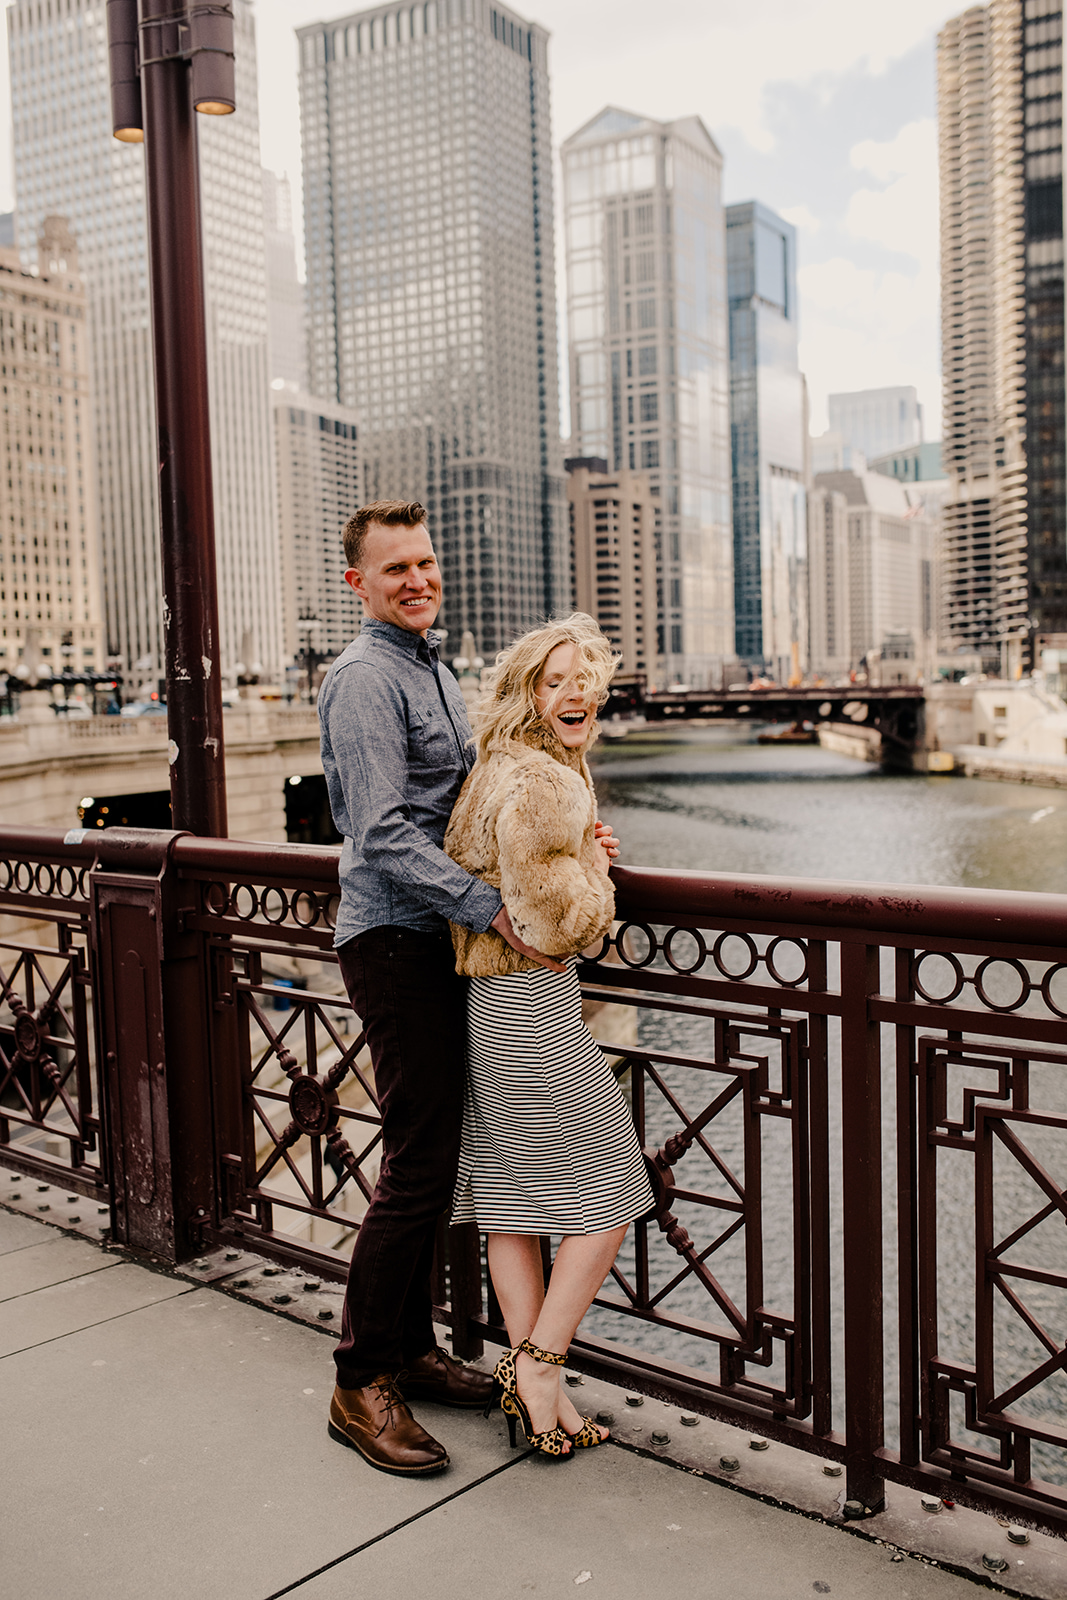 Stills by Hernan: your expert Chicago wedding photographer
